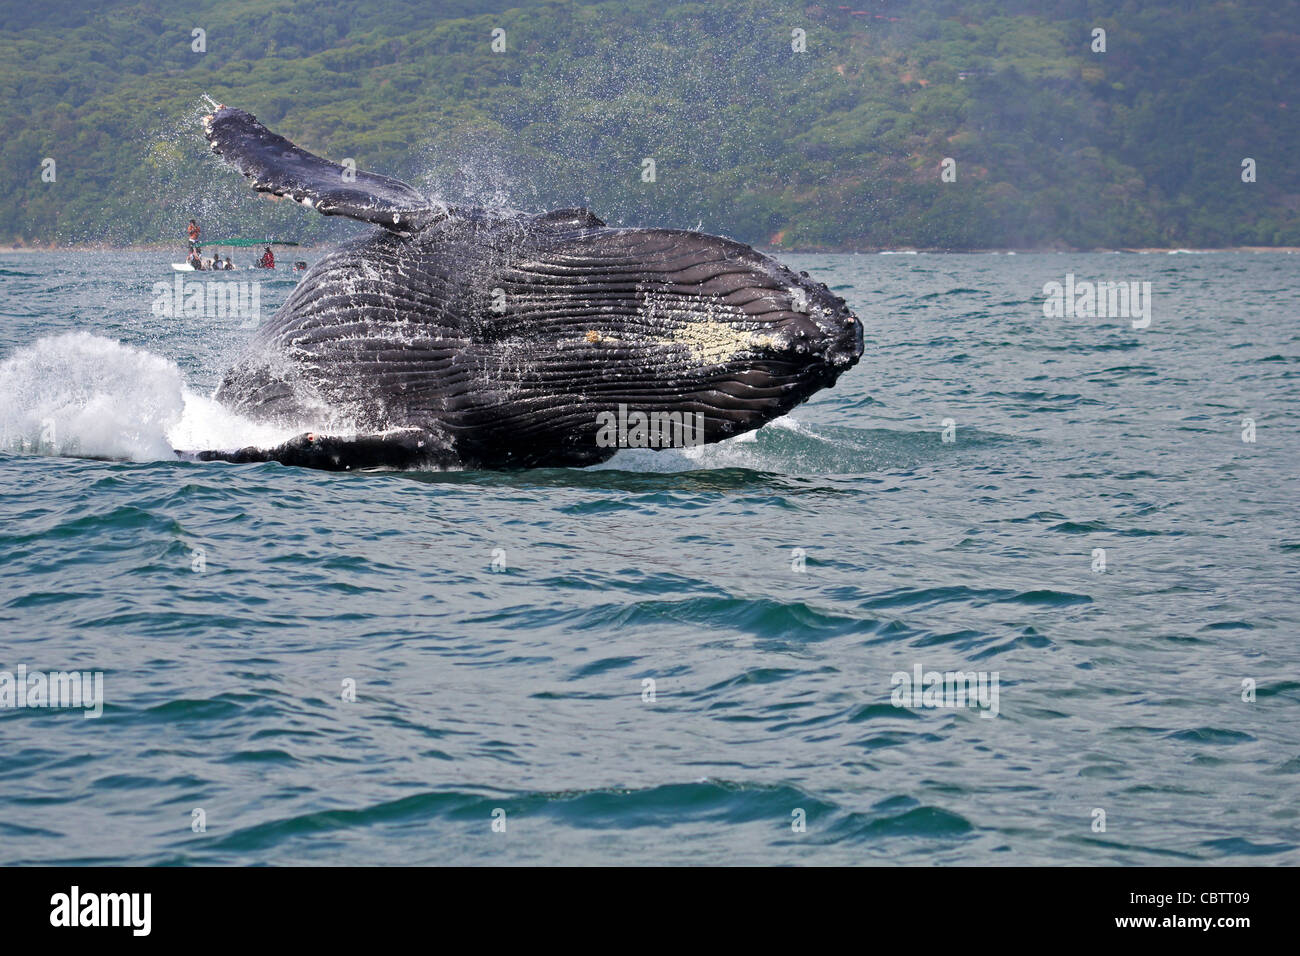 Humpback whale breaching in Marino Ballena National Park, Costa Rica Stock Photo